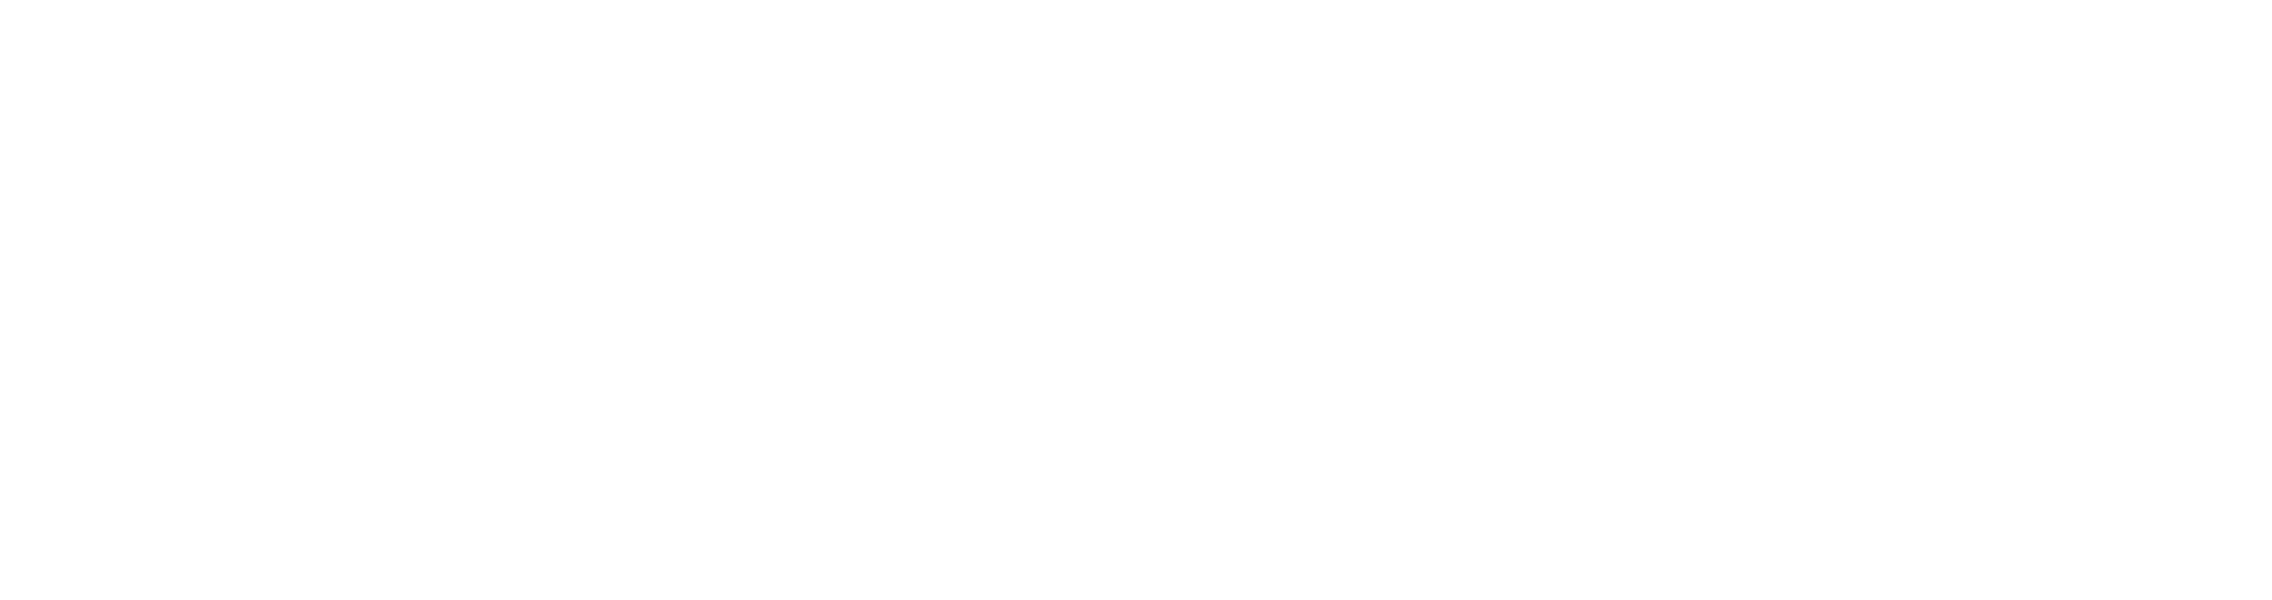 samsung_logo_white